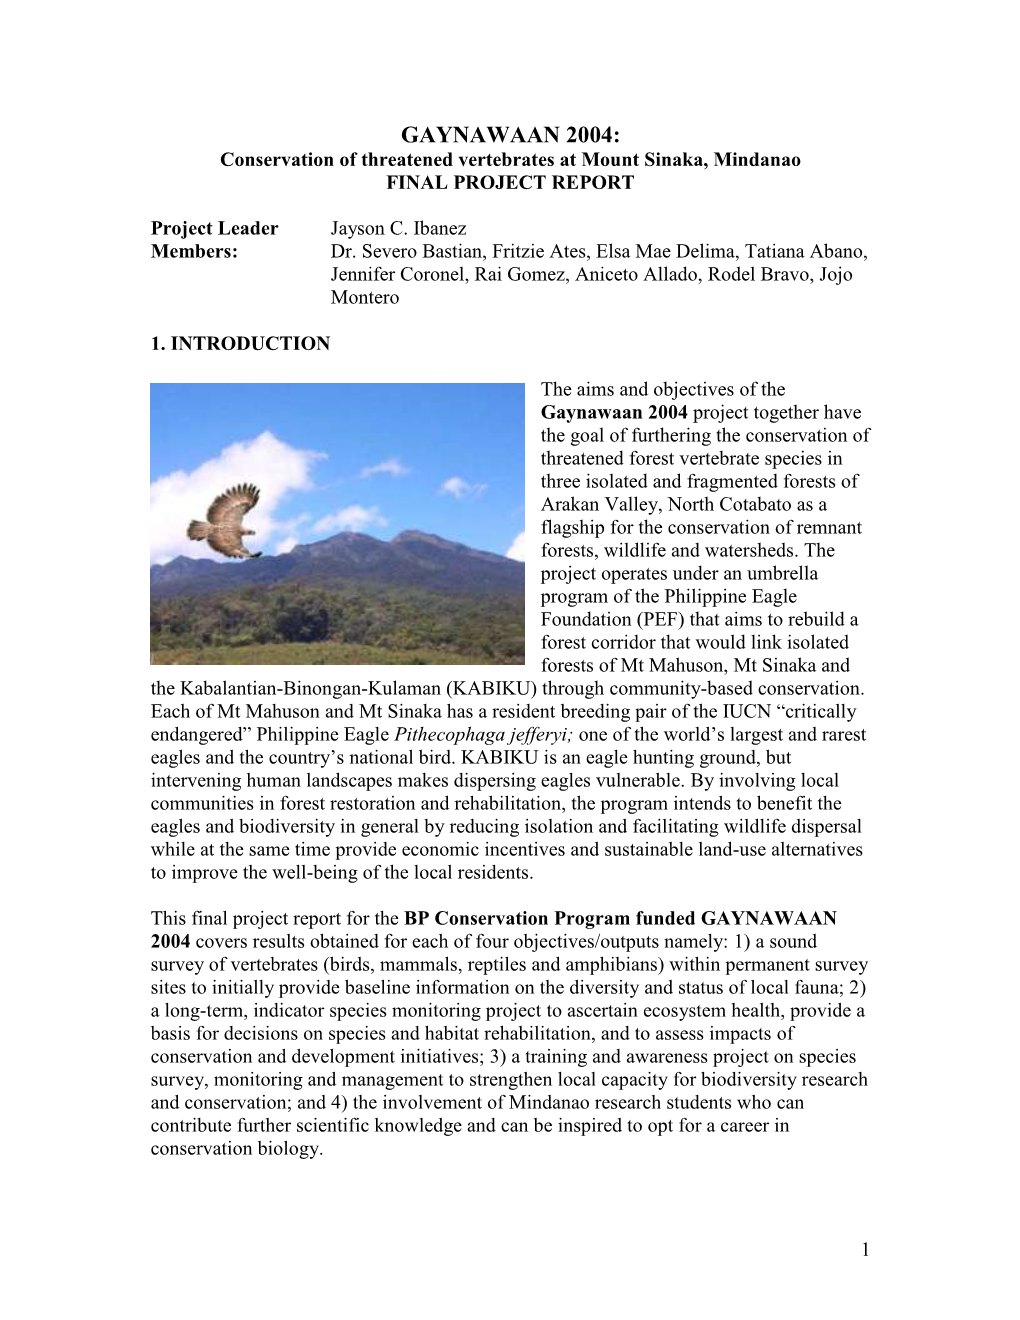 GAYNAWAAN 2004: Conservation of Threatened Vertebrates at Mount Sinaka, Mindanao FINAL PROJECT REPORT